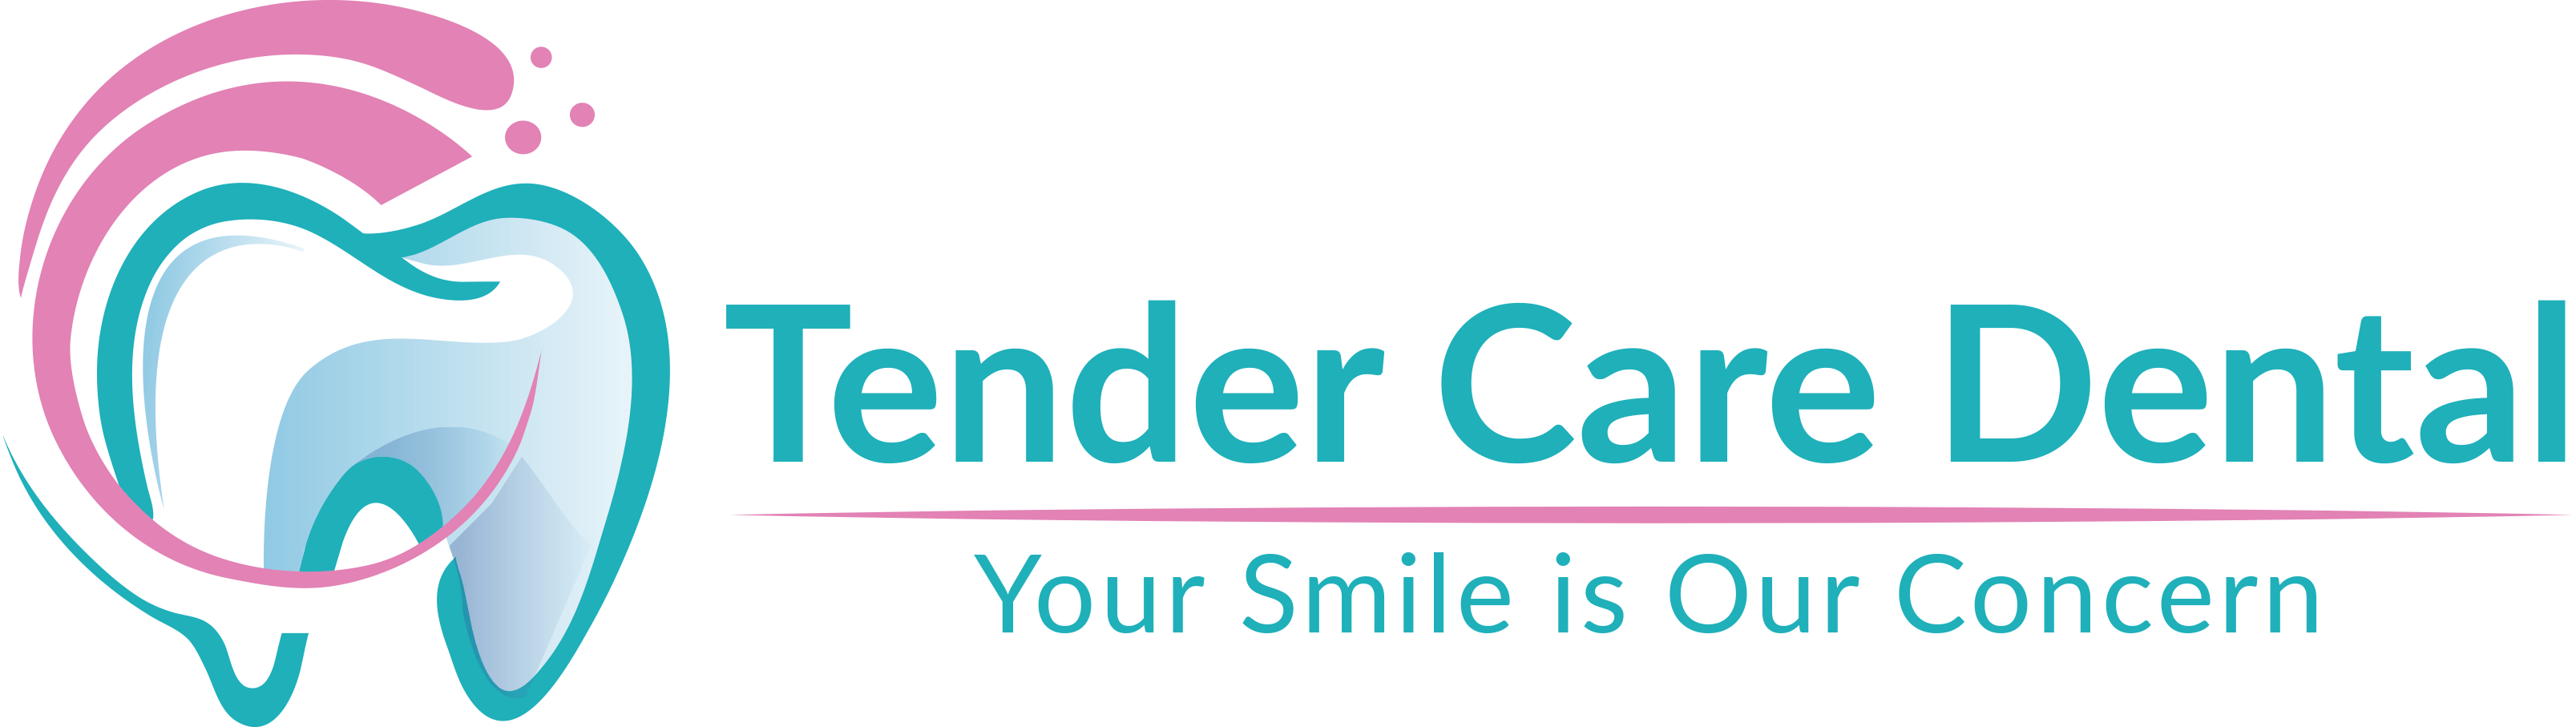 Diamond Tooth Logo - Tender Care Dental Clinic | Dentist in Kenya | Dental Services in Kenya